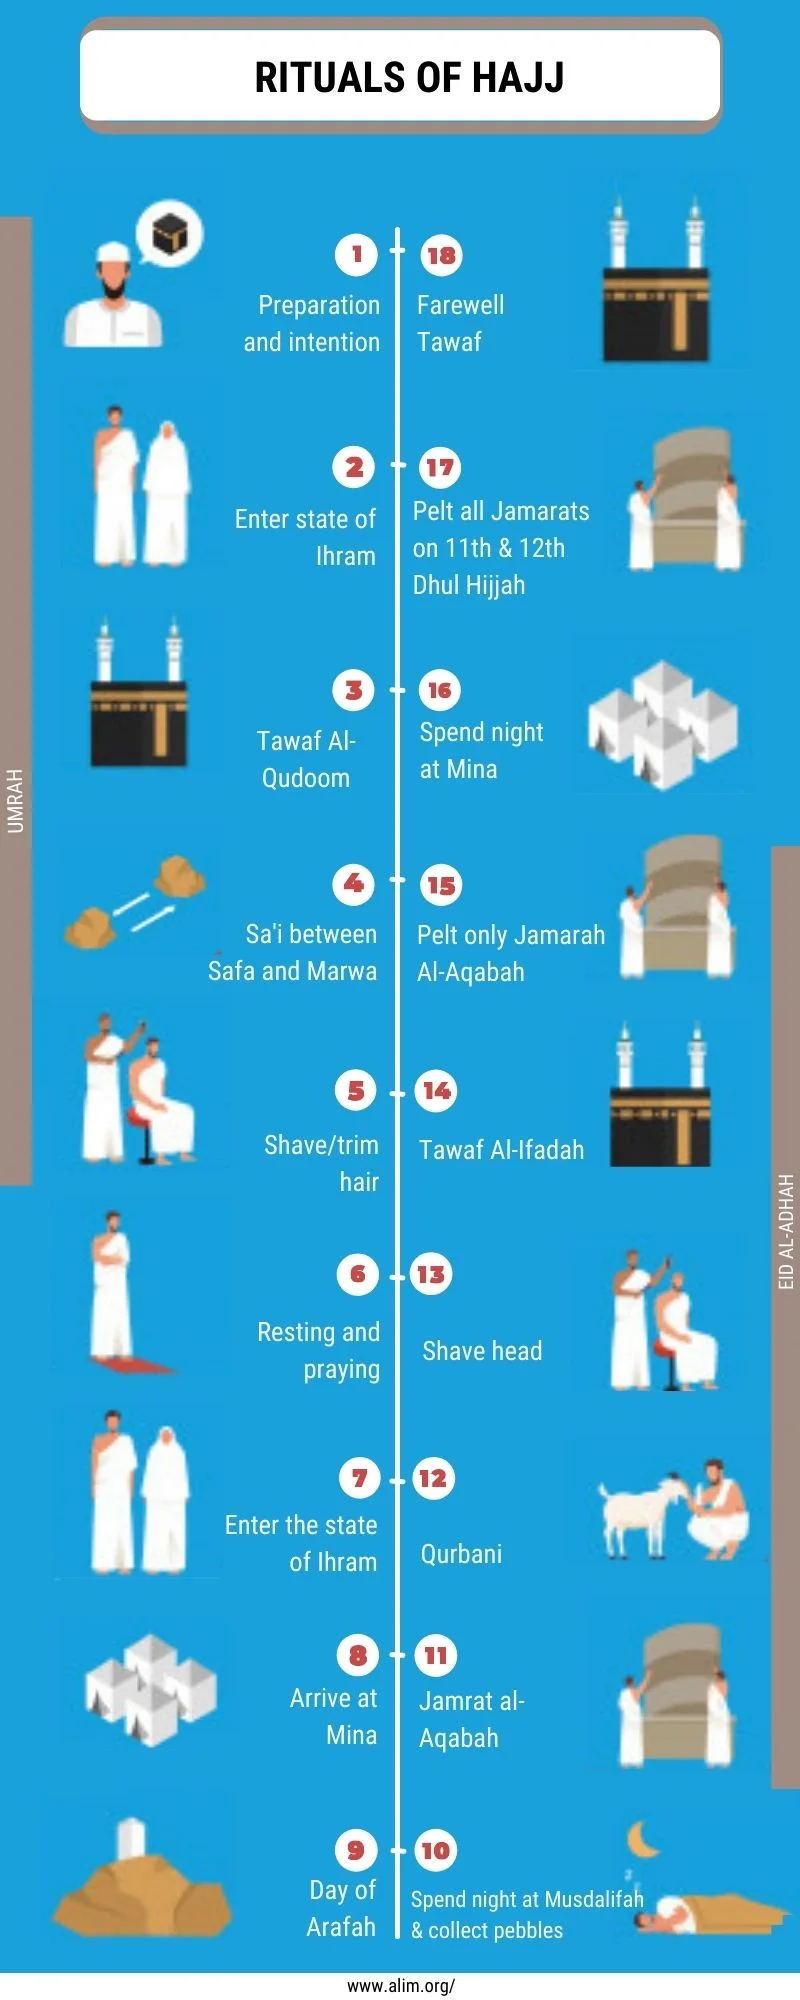 Rituals of Hajj